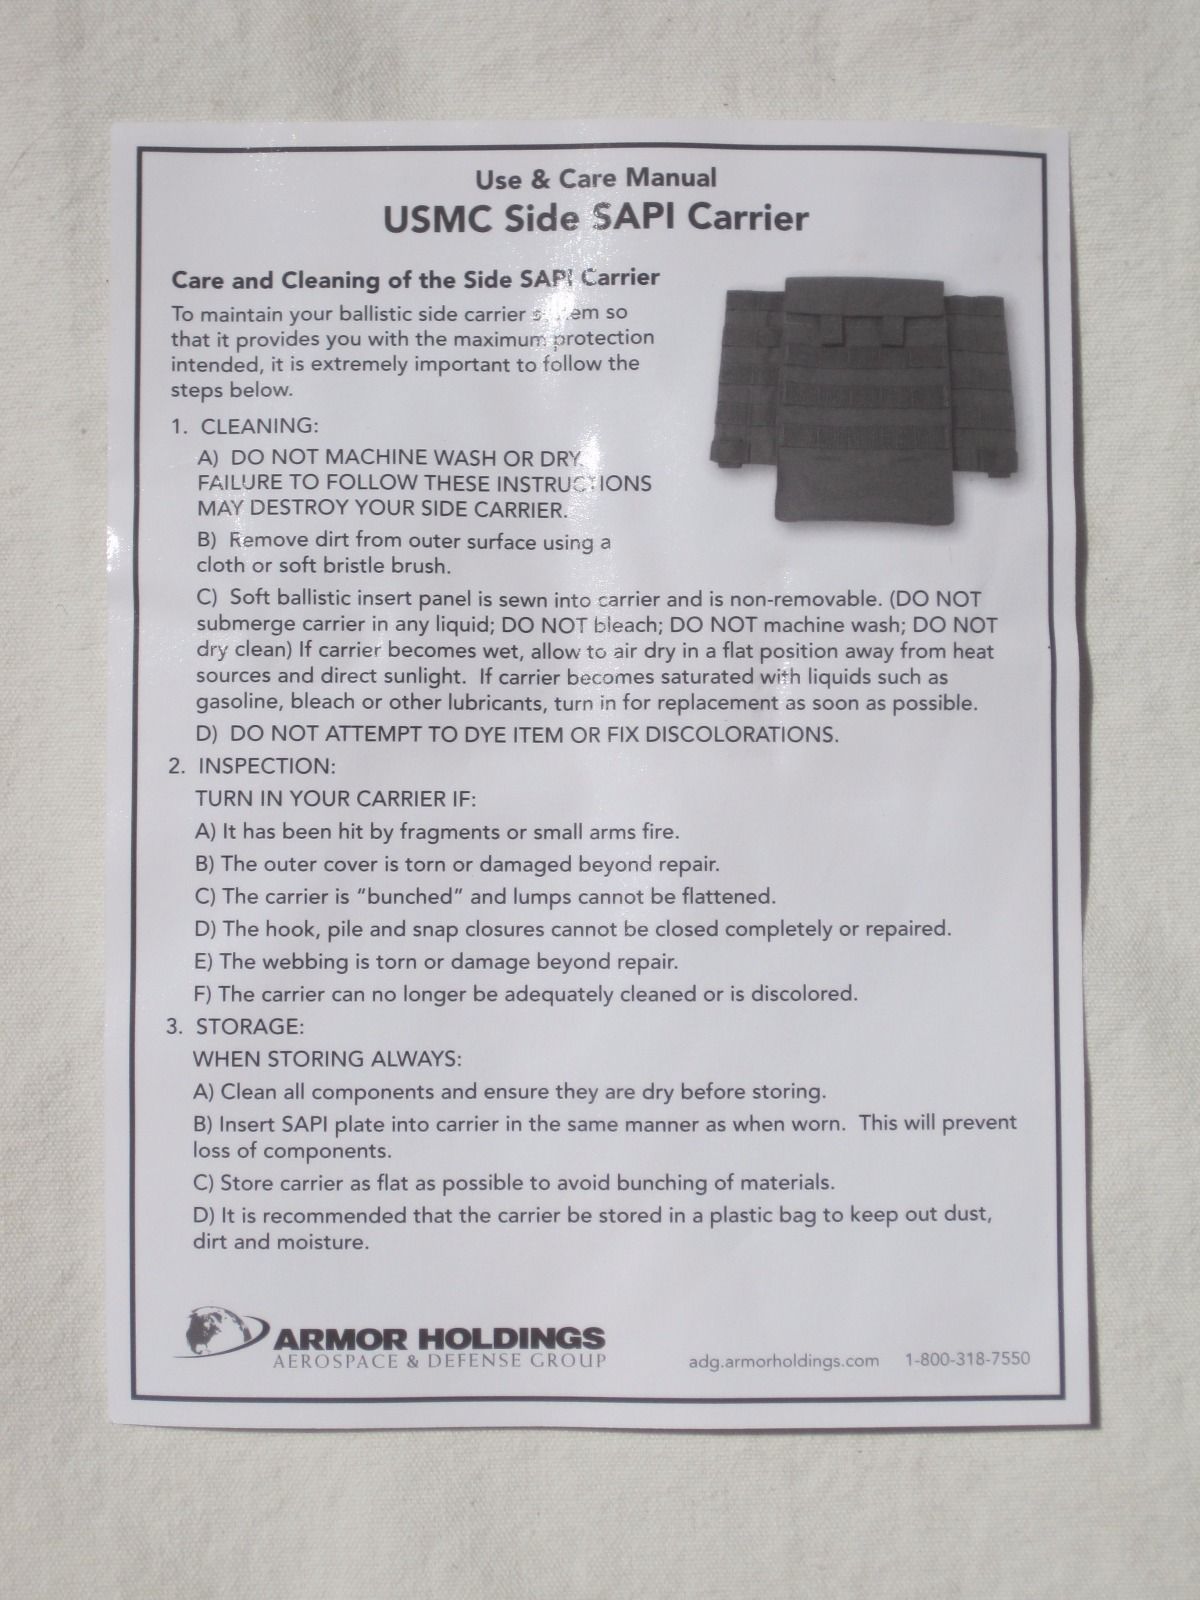 USMC S-SAPI carrier use and care manual